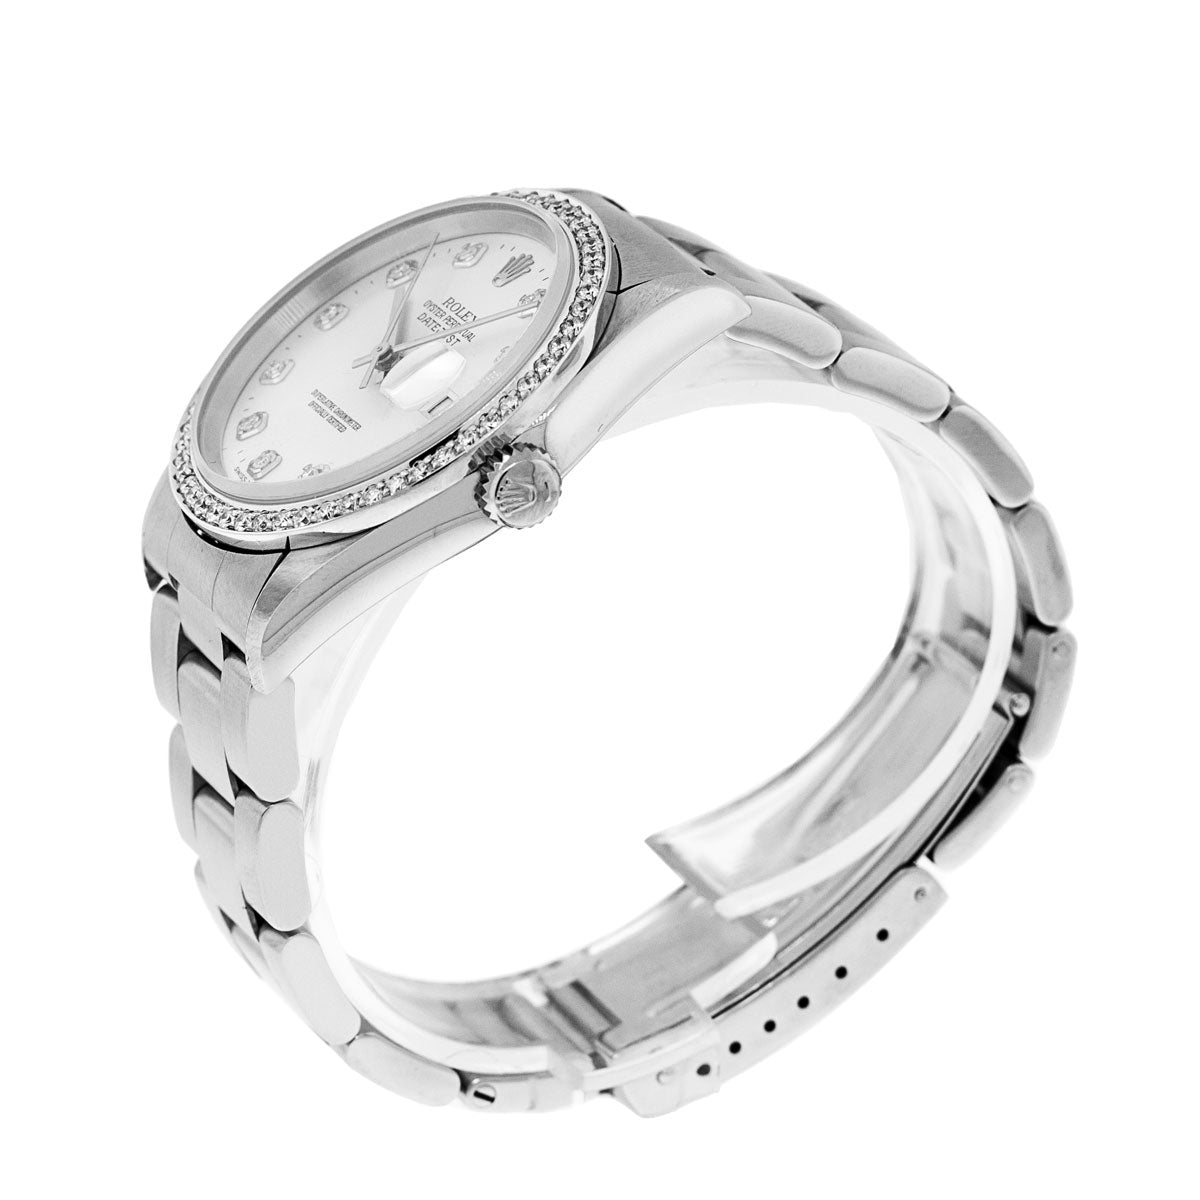 Rolex Datejust 36mm Stainless Steel Silver Diamond Dial & Bezel 16234